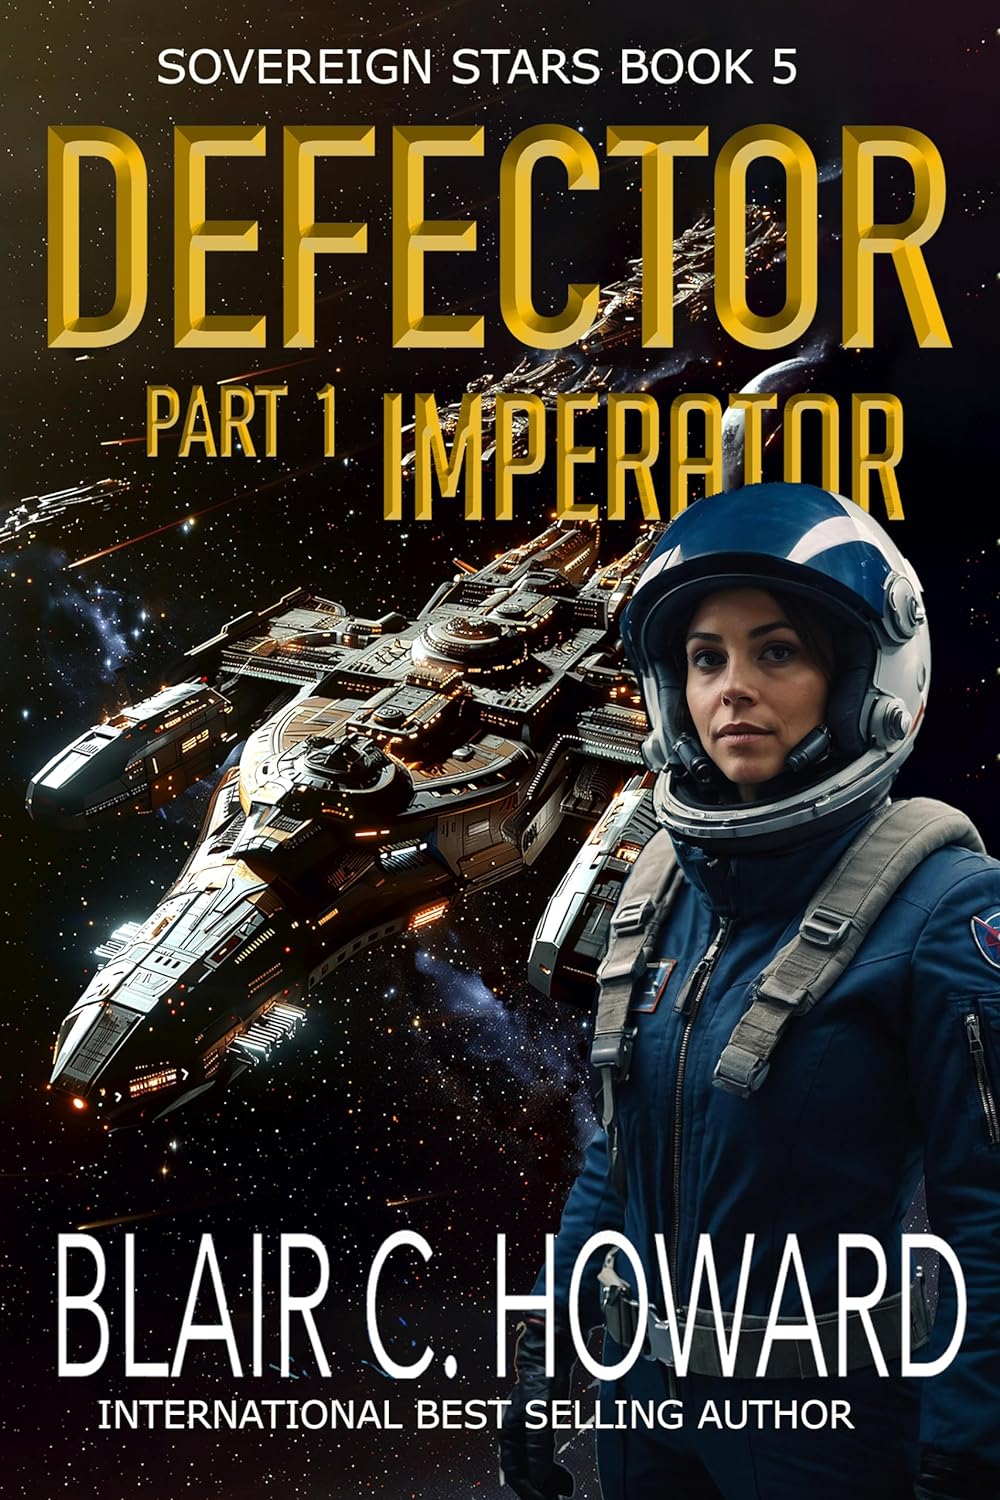 Defector: Part 1: Imperator